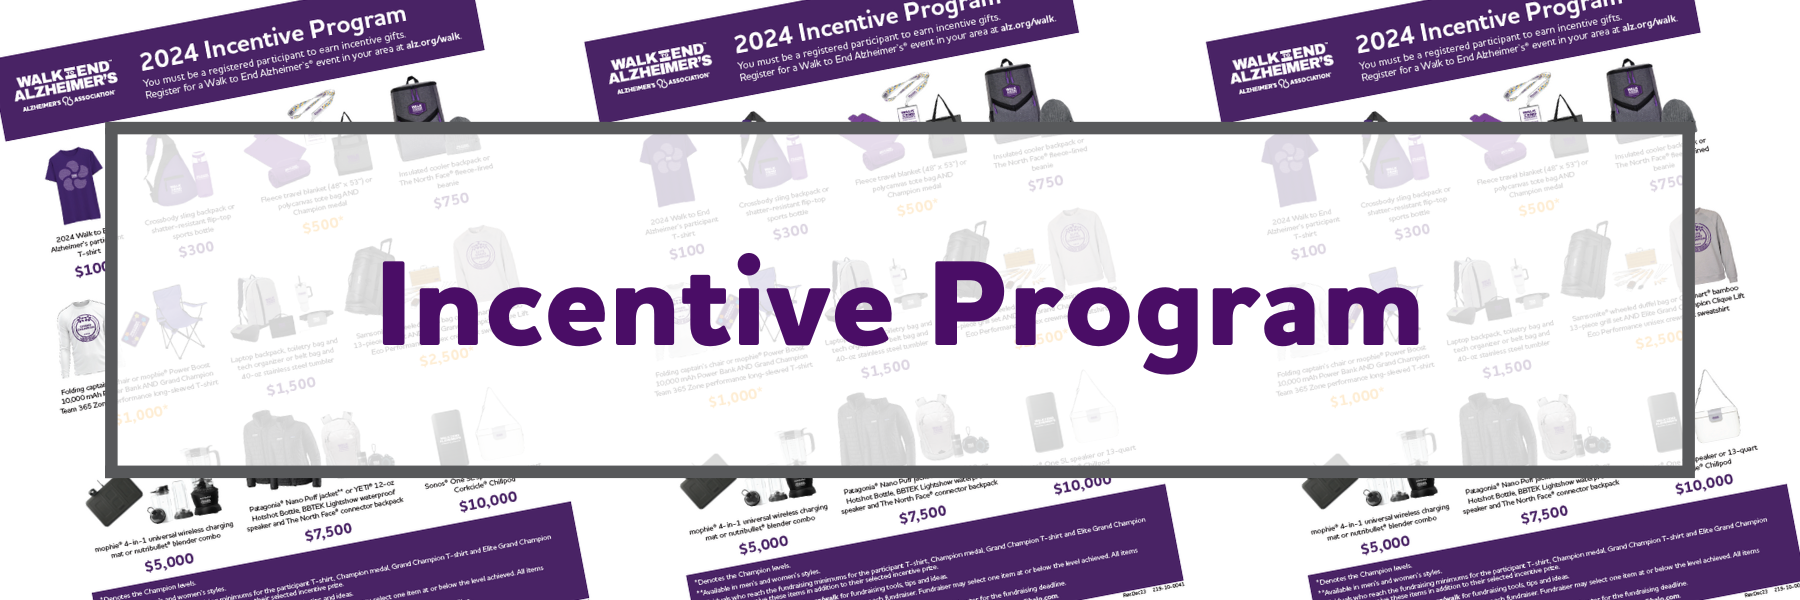 incentive_program_-_walk_page_2024252478.png